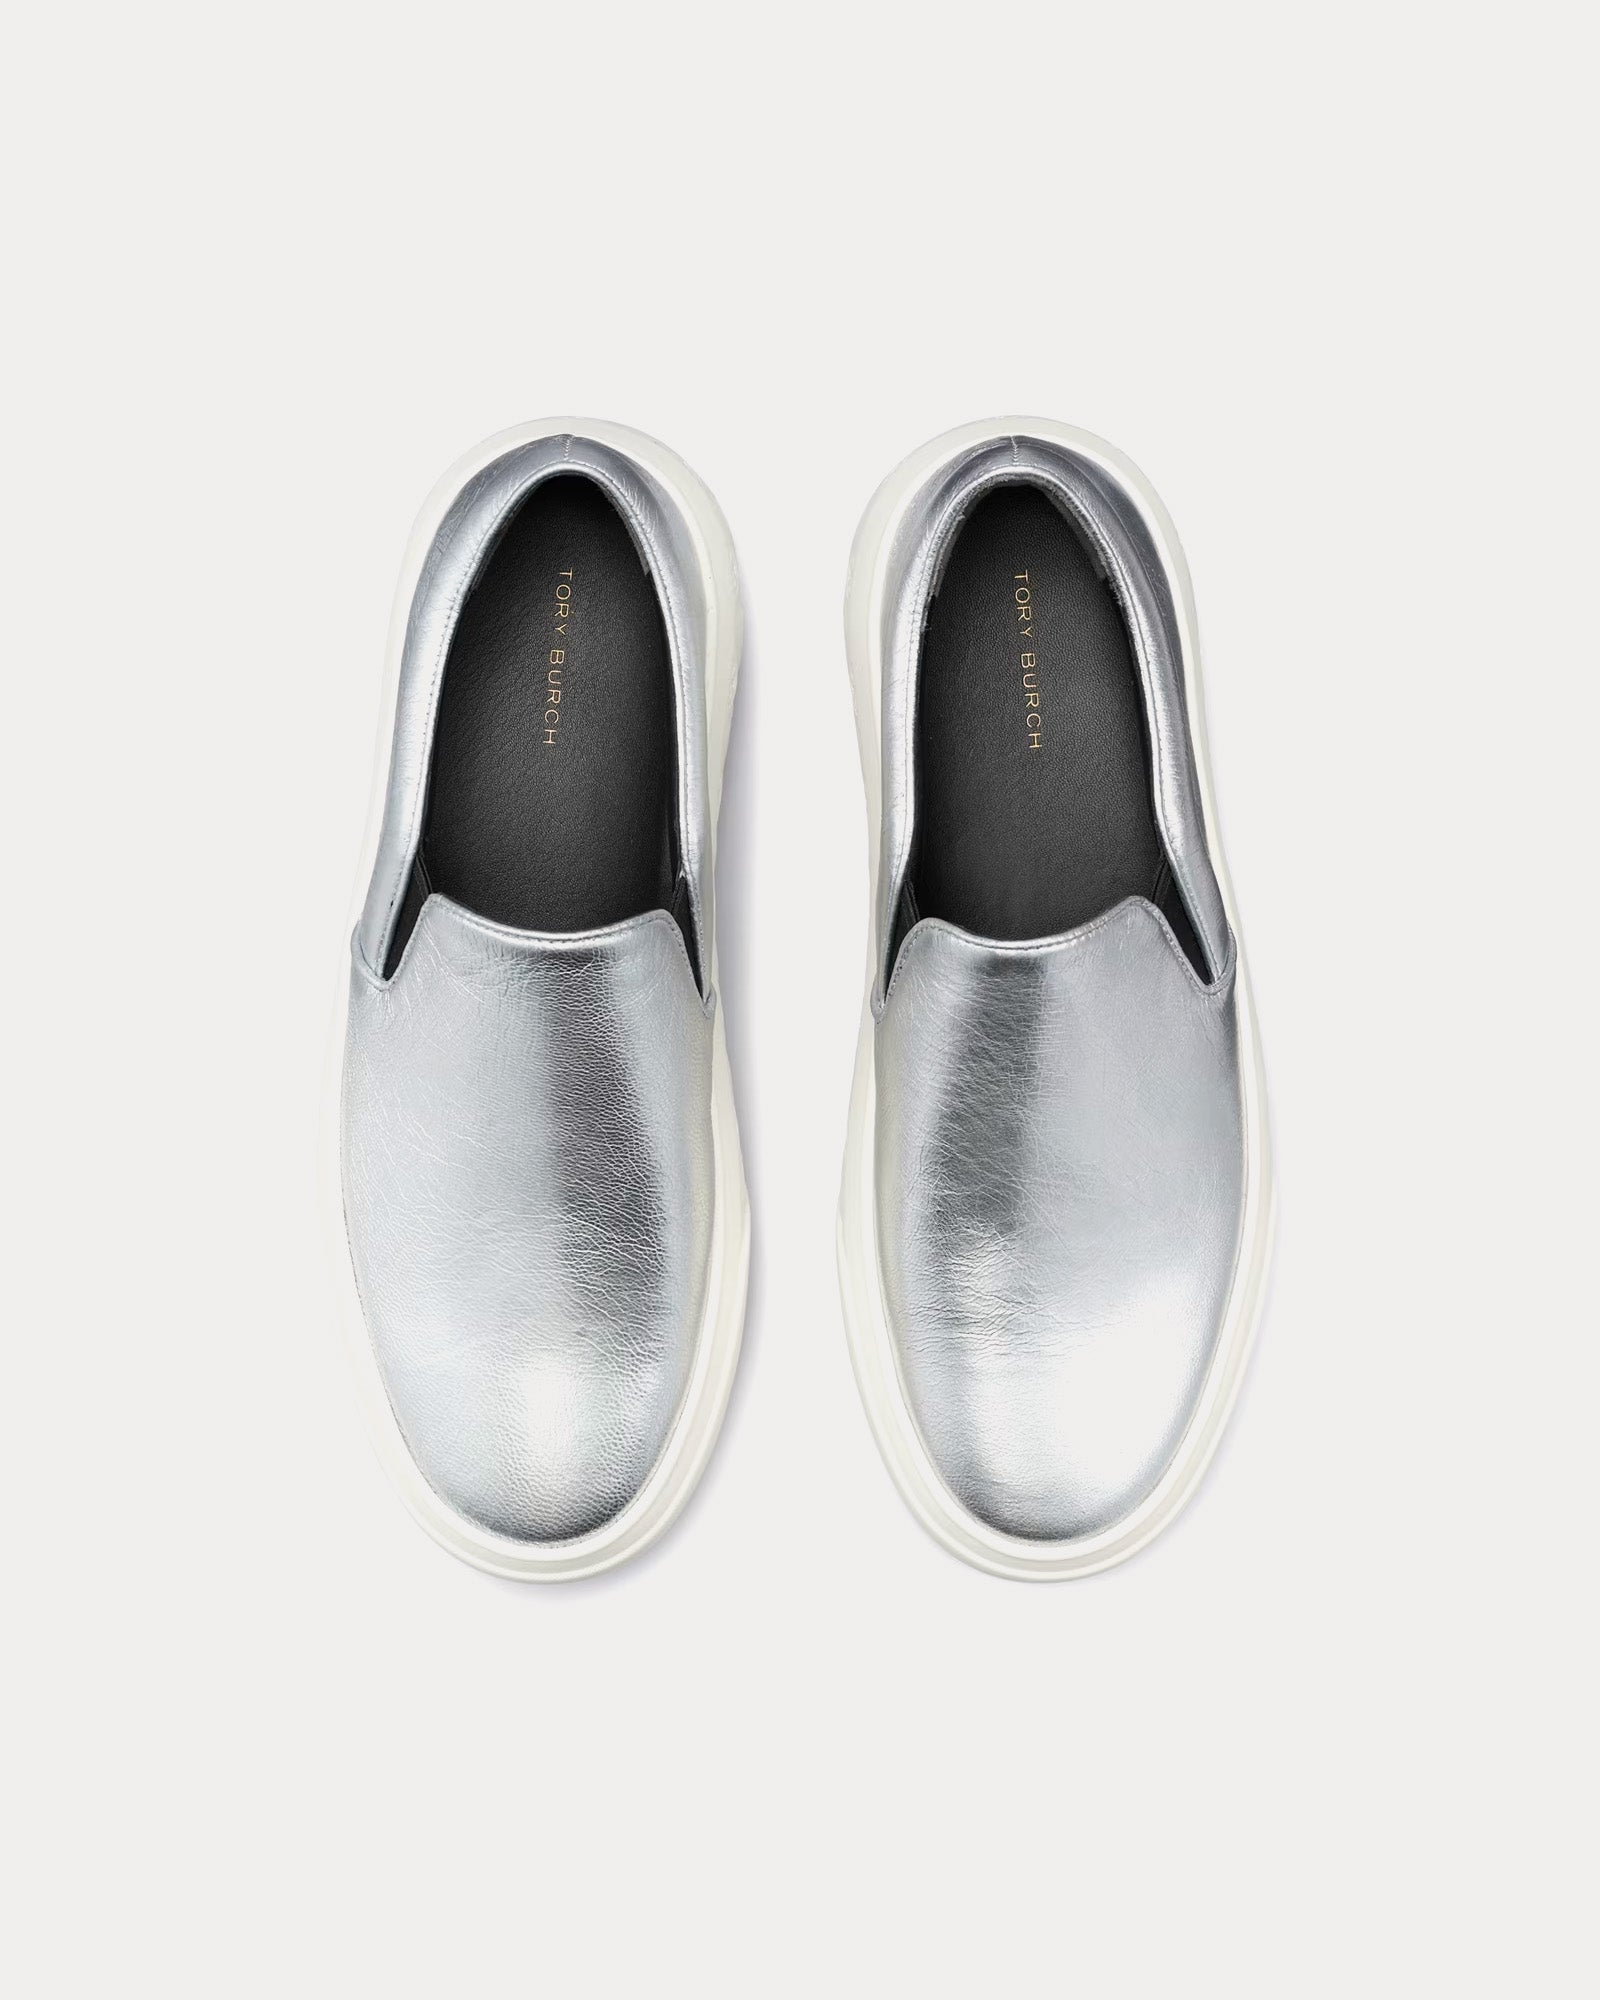 Tory Burch - Ladybug Metallic Leather Silver Slip On Sneakers